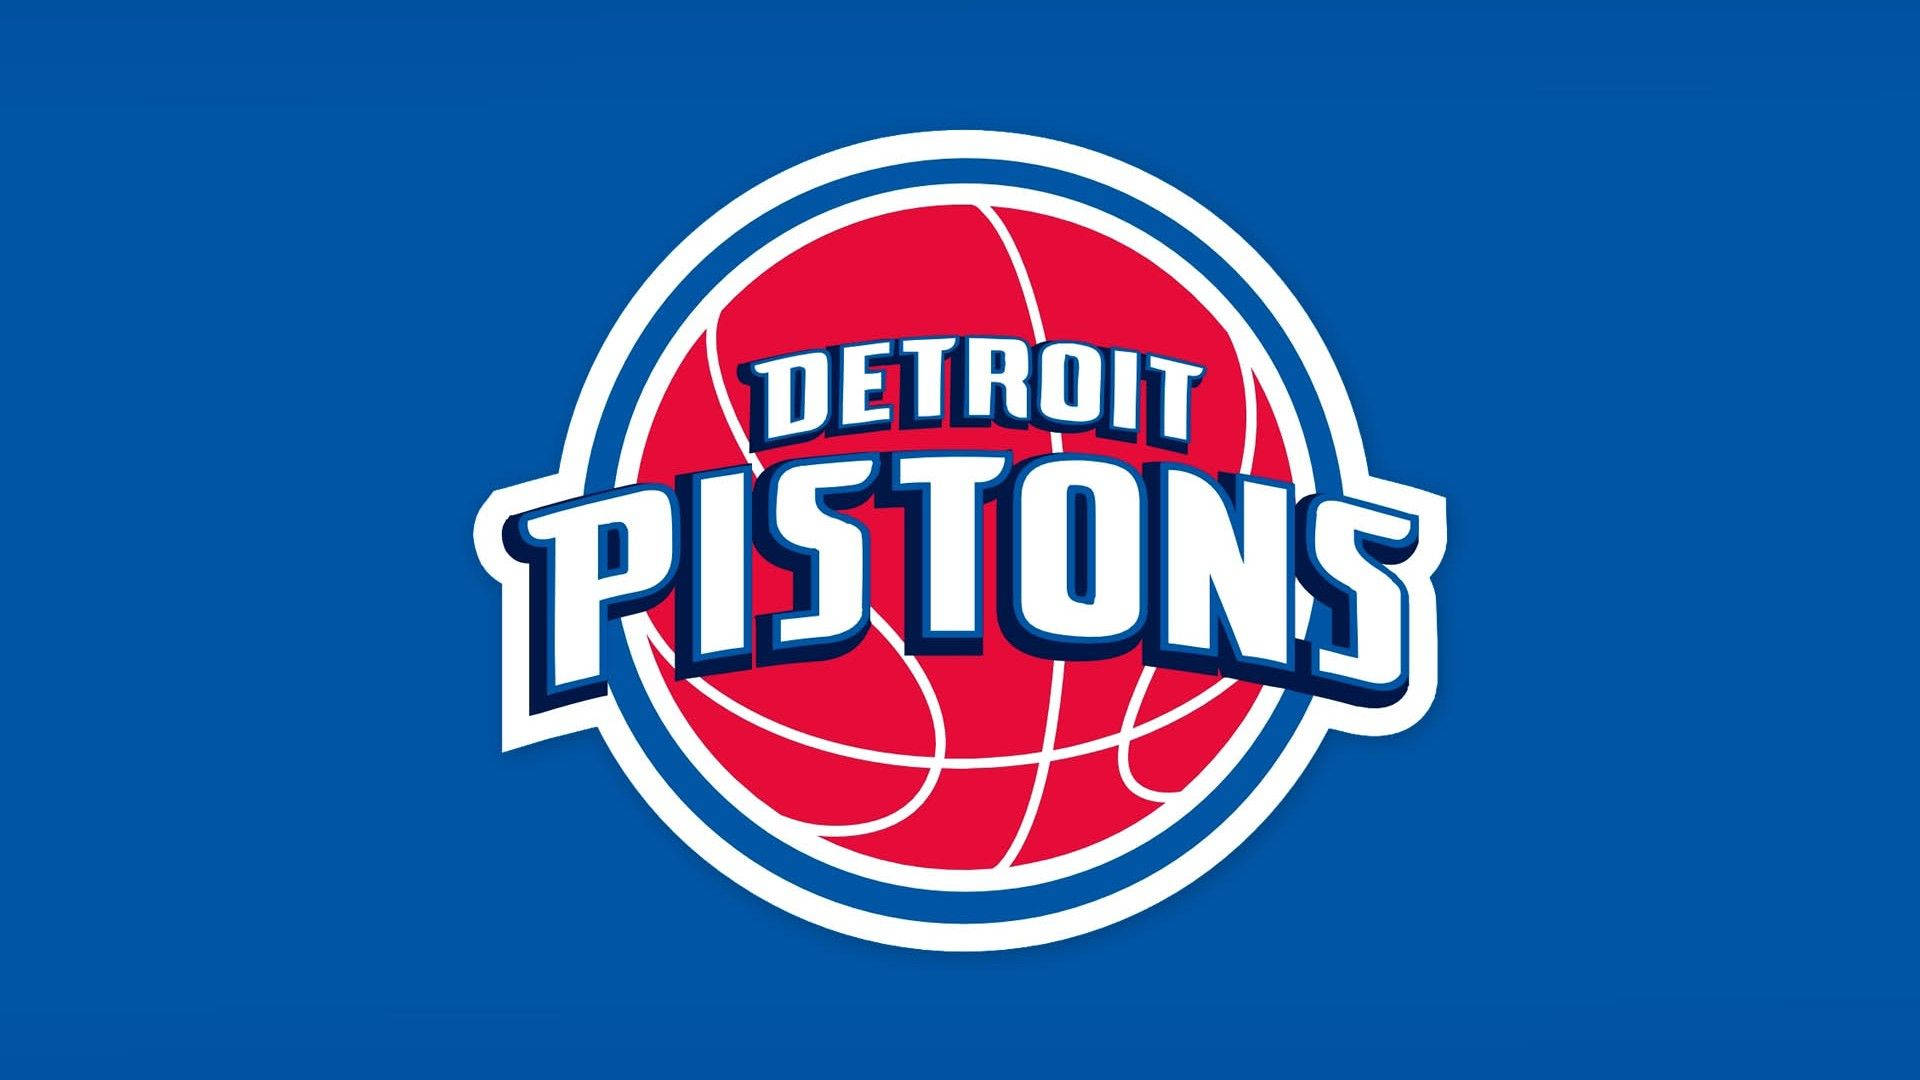 Detroit Pistons Vintage Team Logo